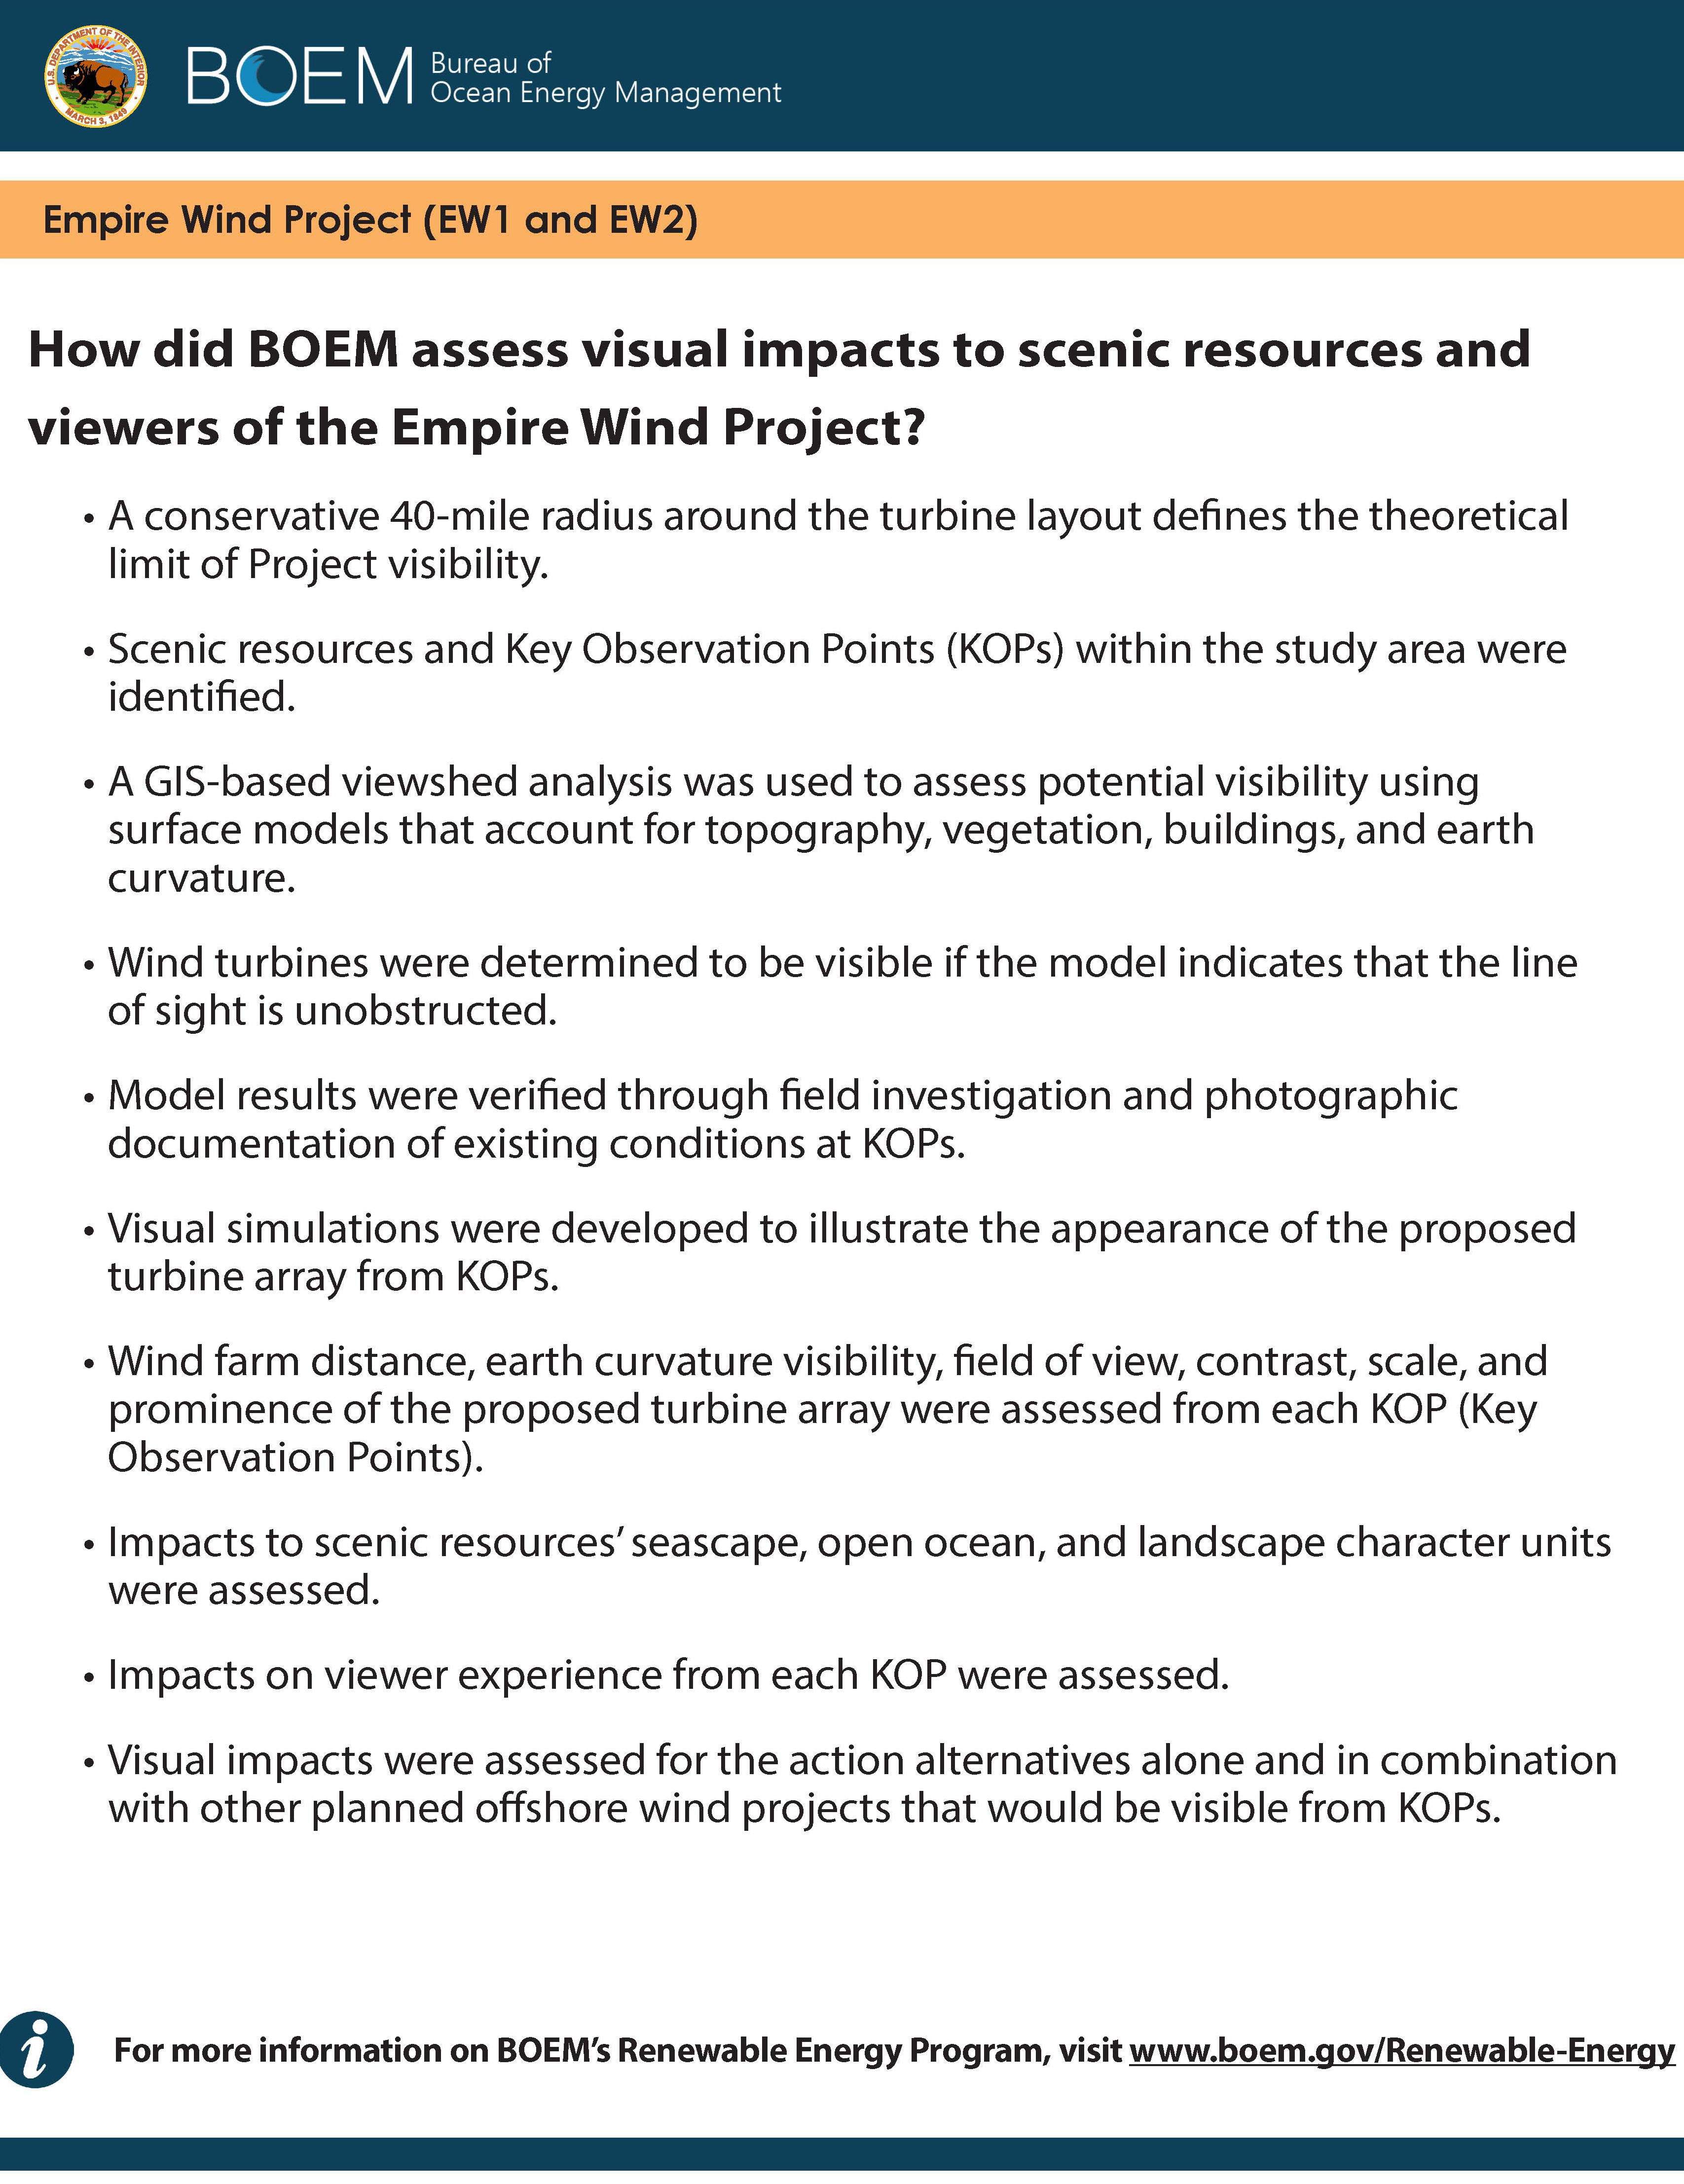 Assess Visual Impacts